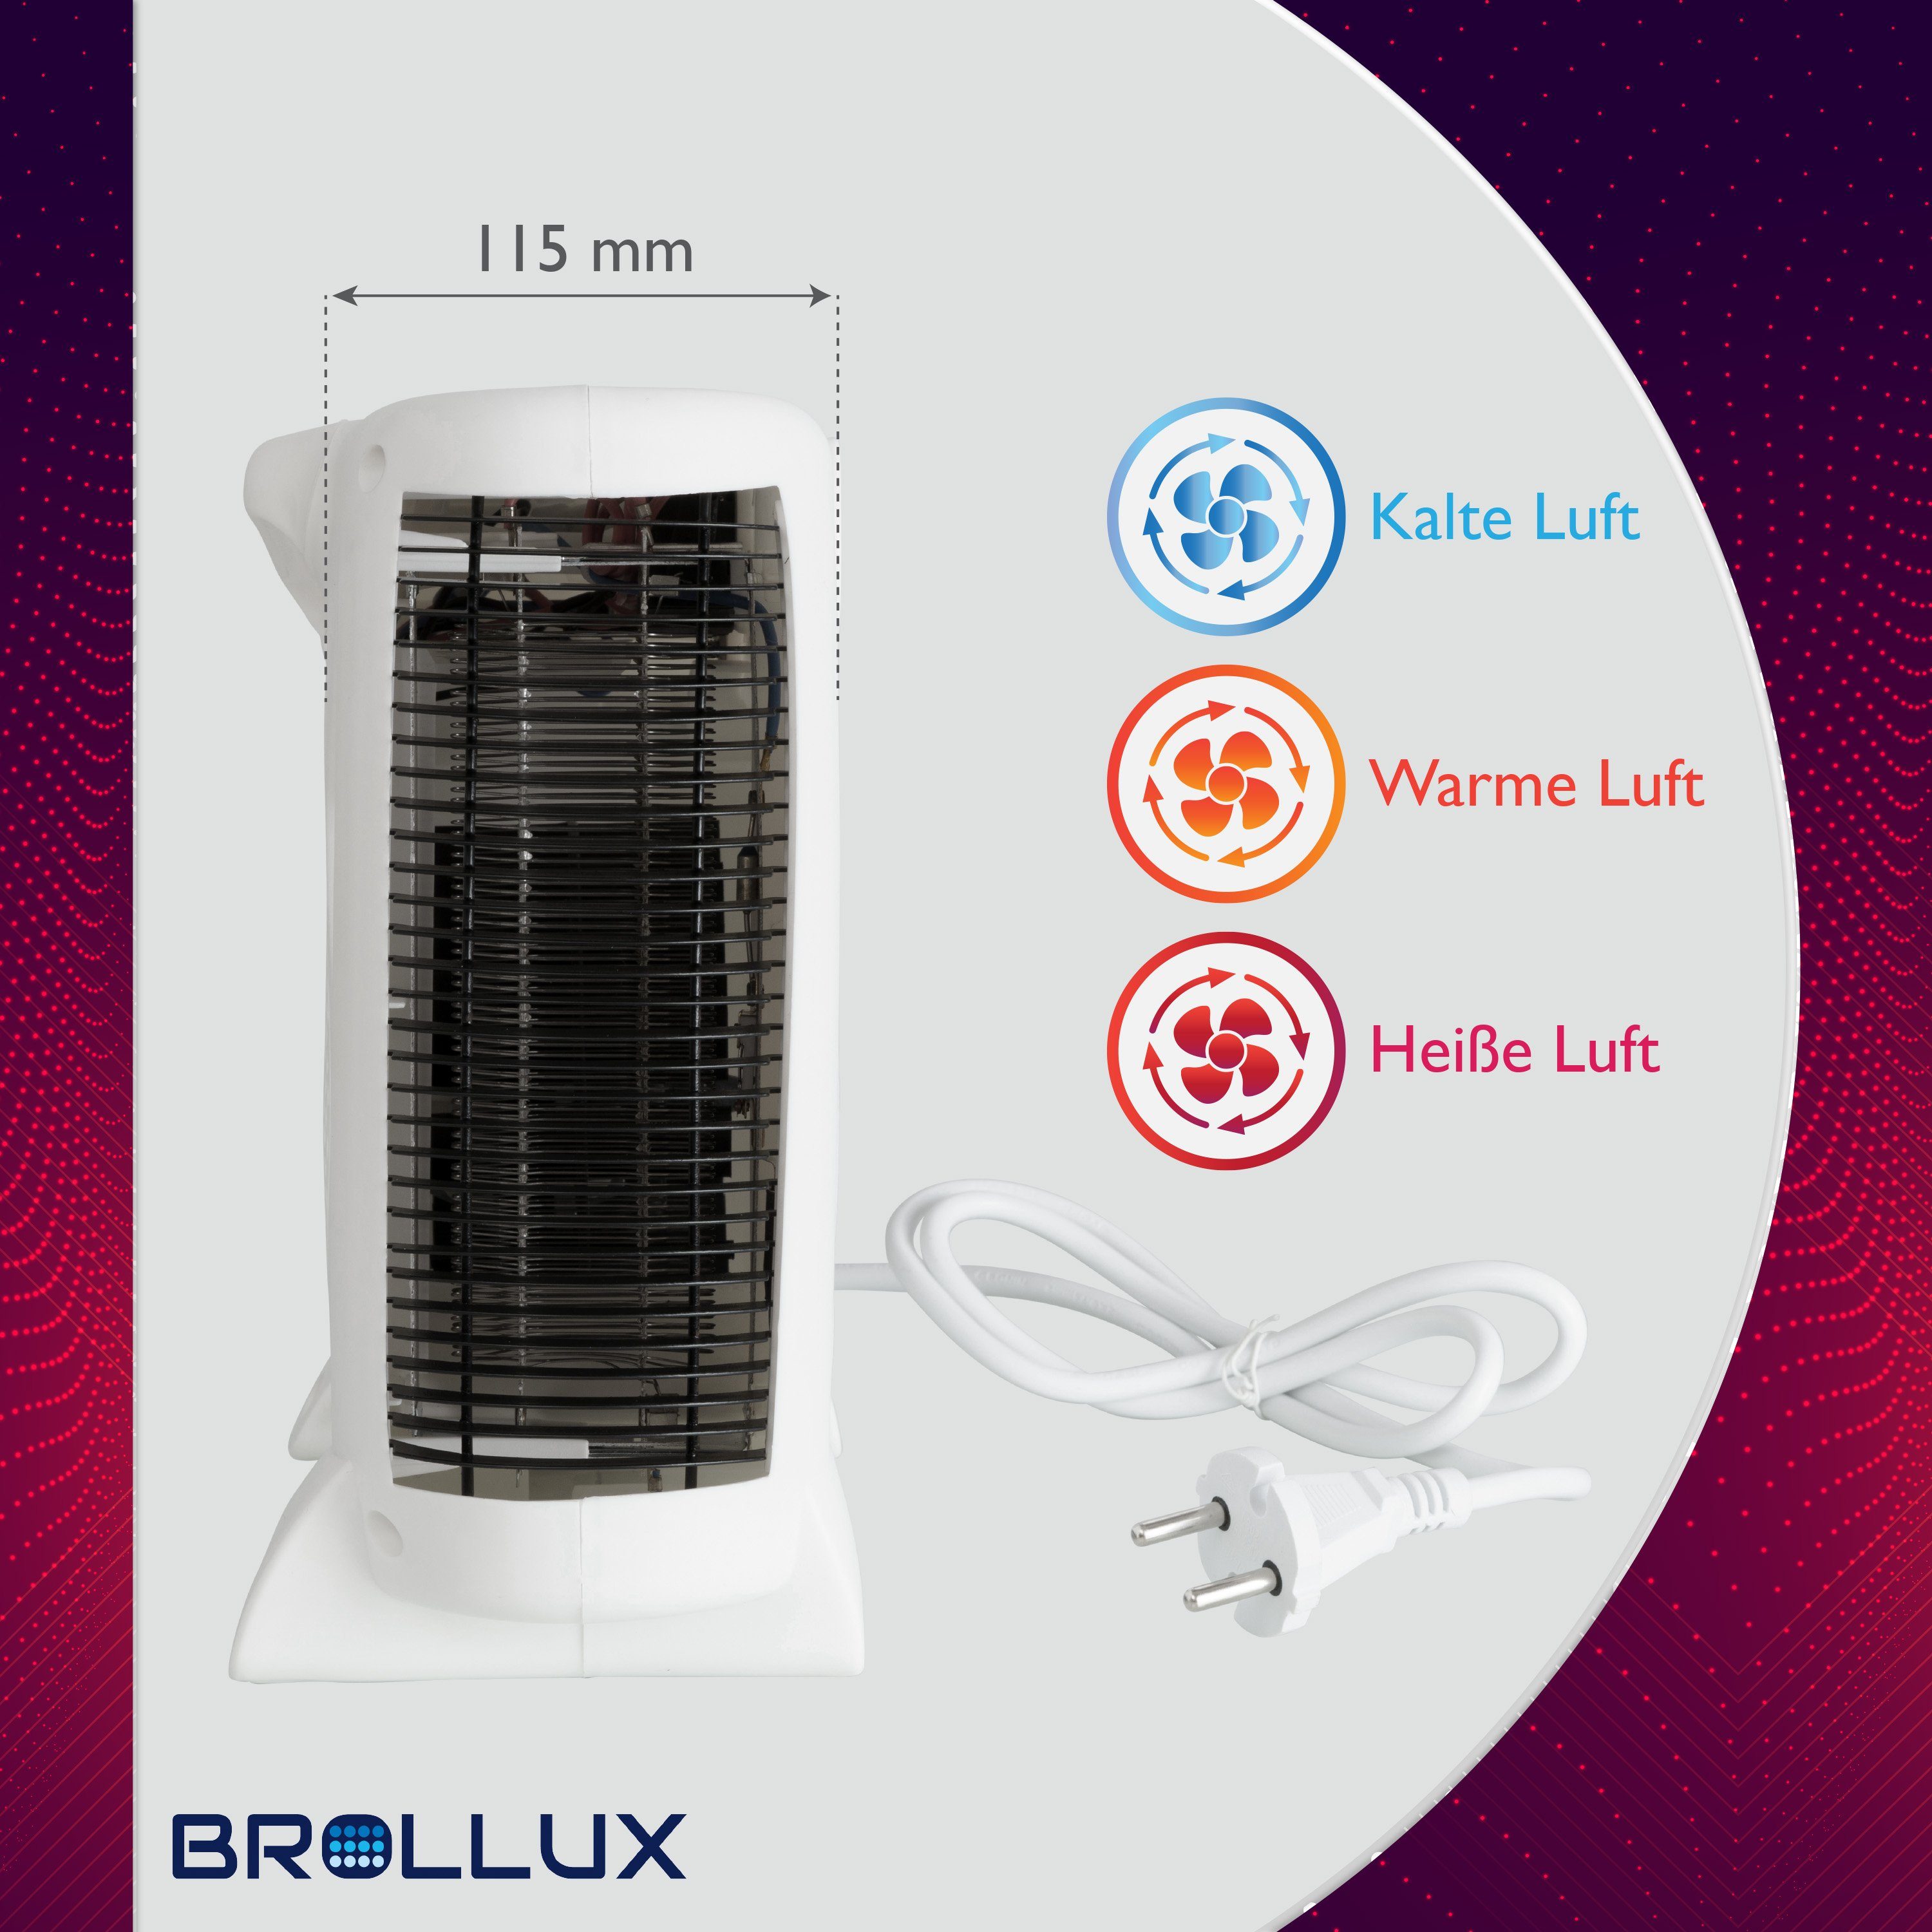 Ventilator mobiles Konvektor BROLLUX 2000 Elektroheizung, Heizgerät W, mit 2000W Heizlüfter Heizgerät Lüfter